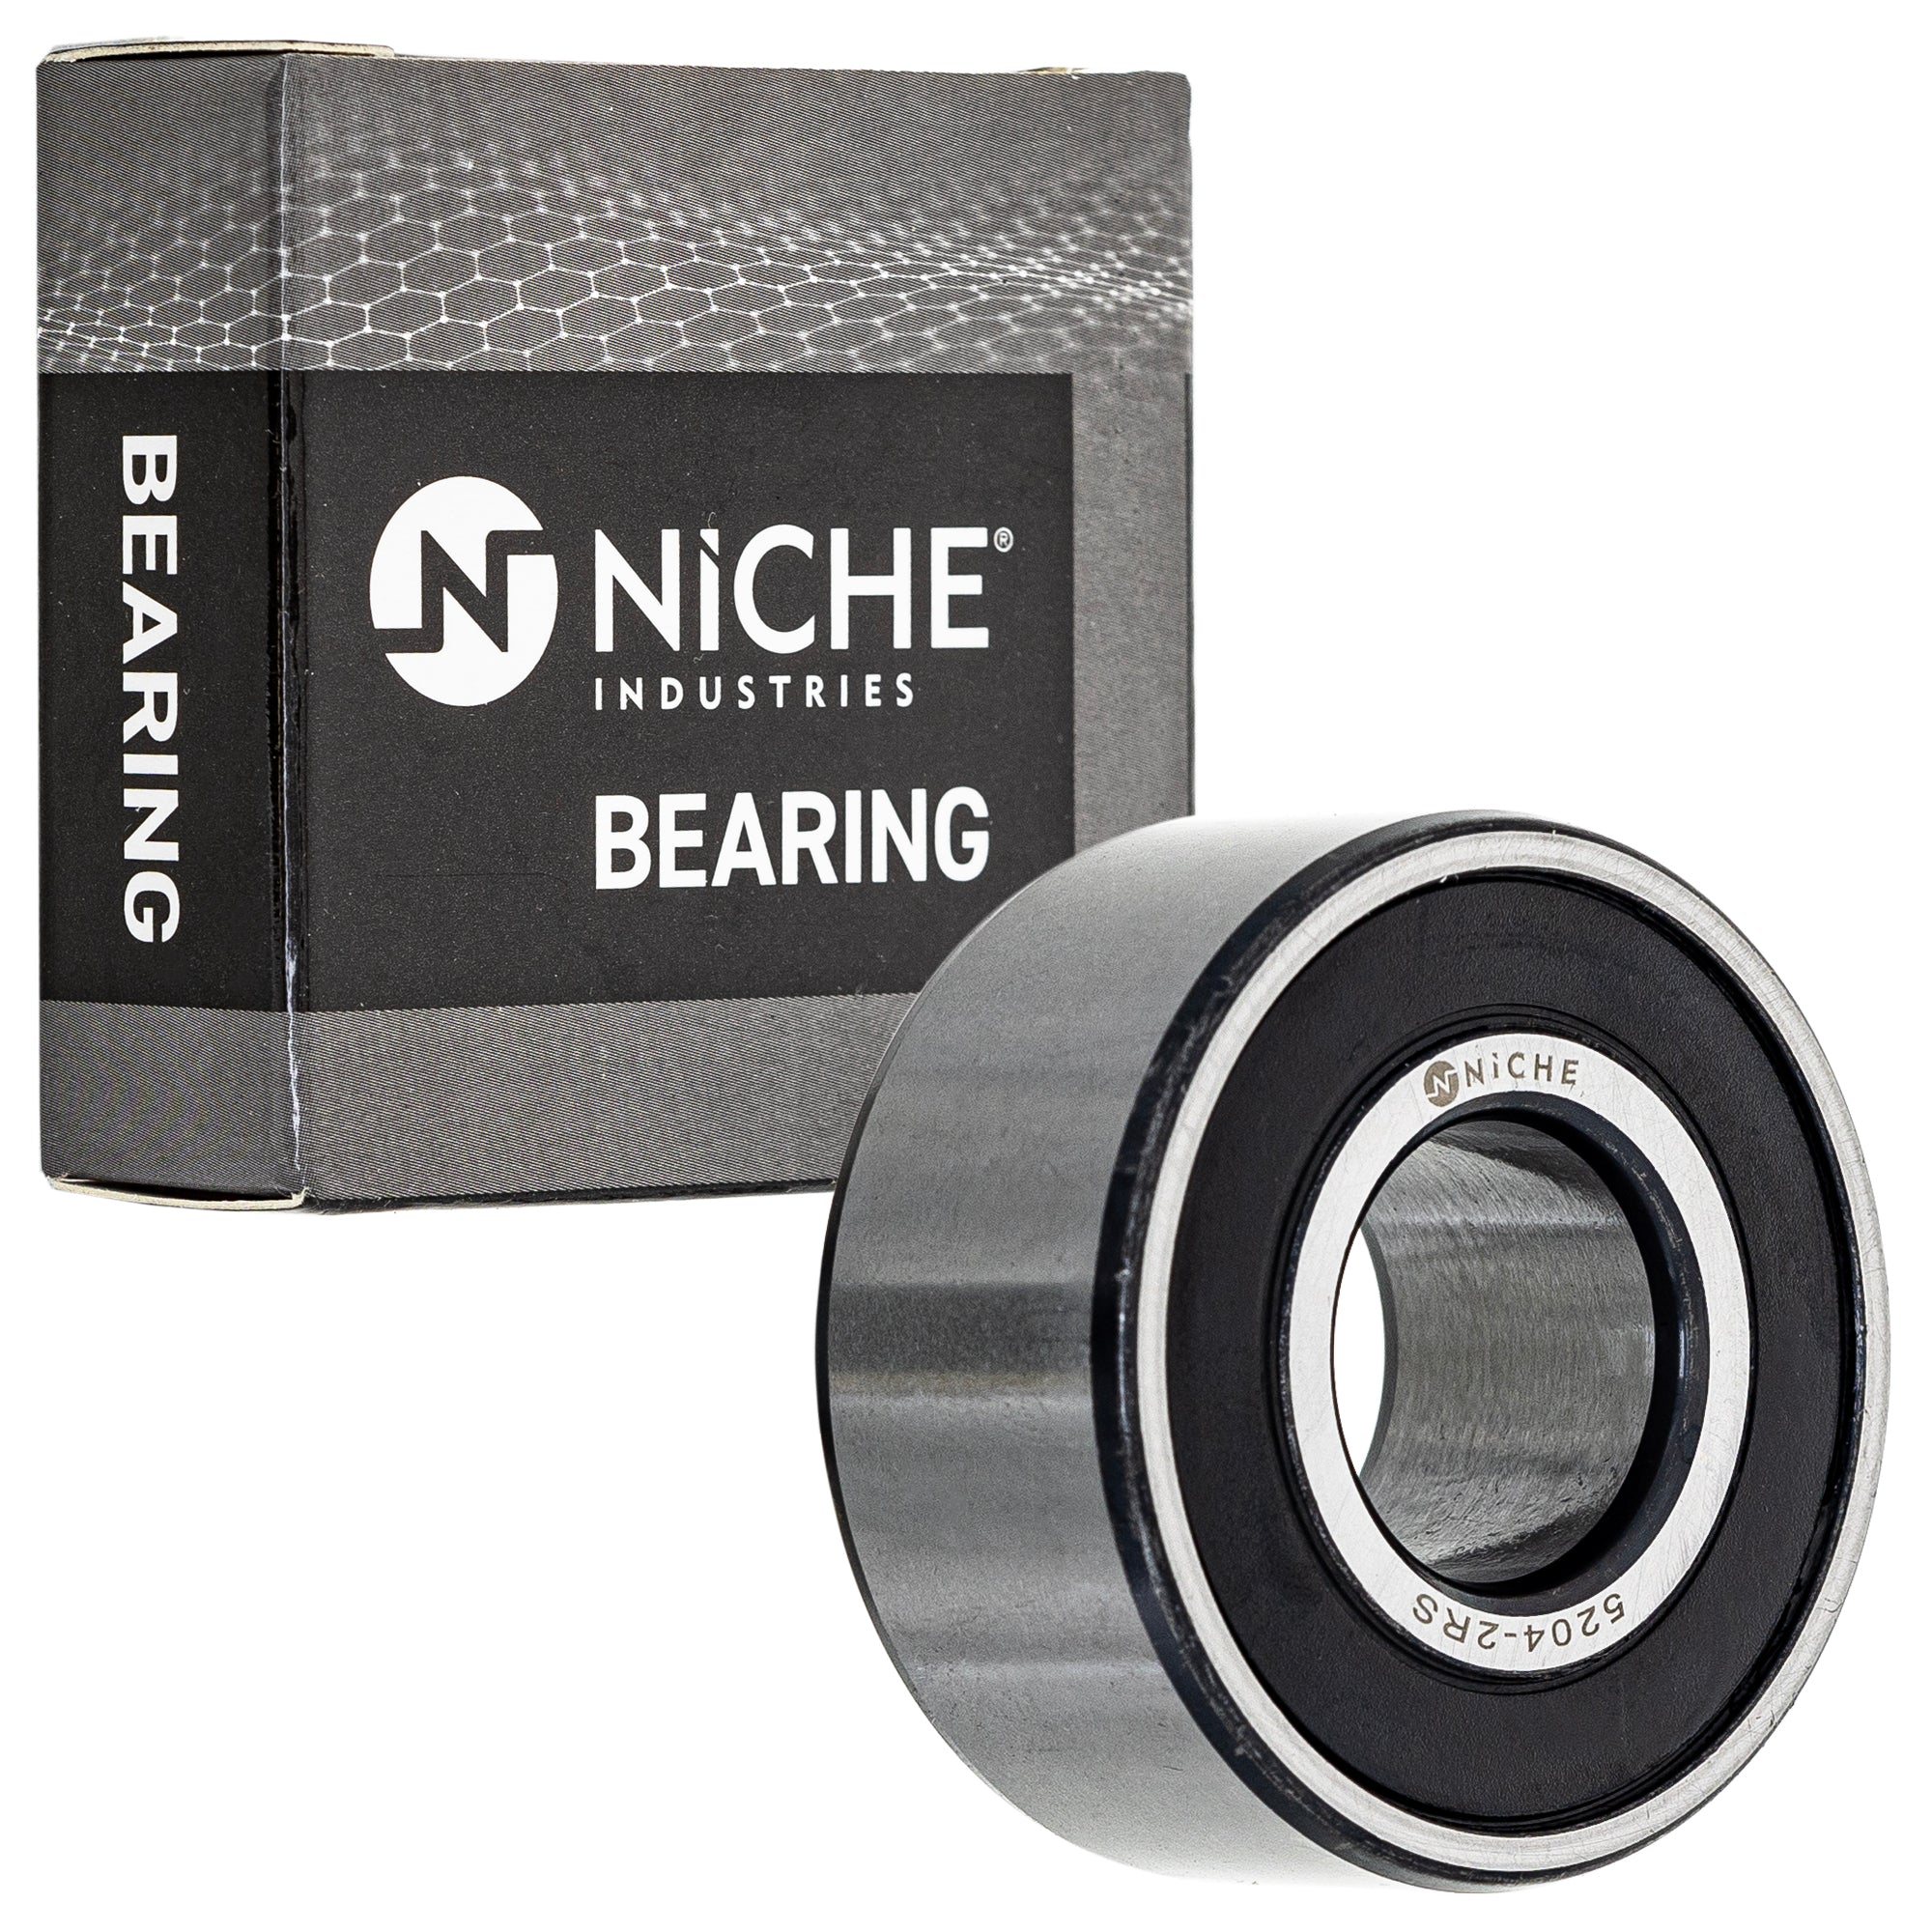 NICHE 519-CBB2260R Bearing 2-Pack for zOTHER XR650R VTX1800T VTX1800S